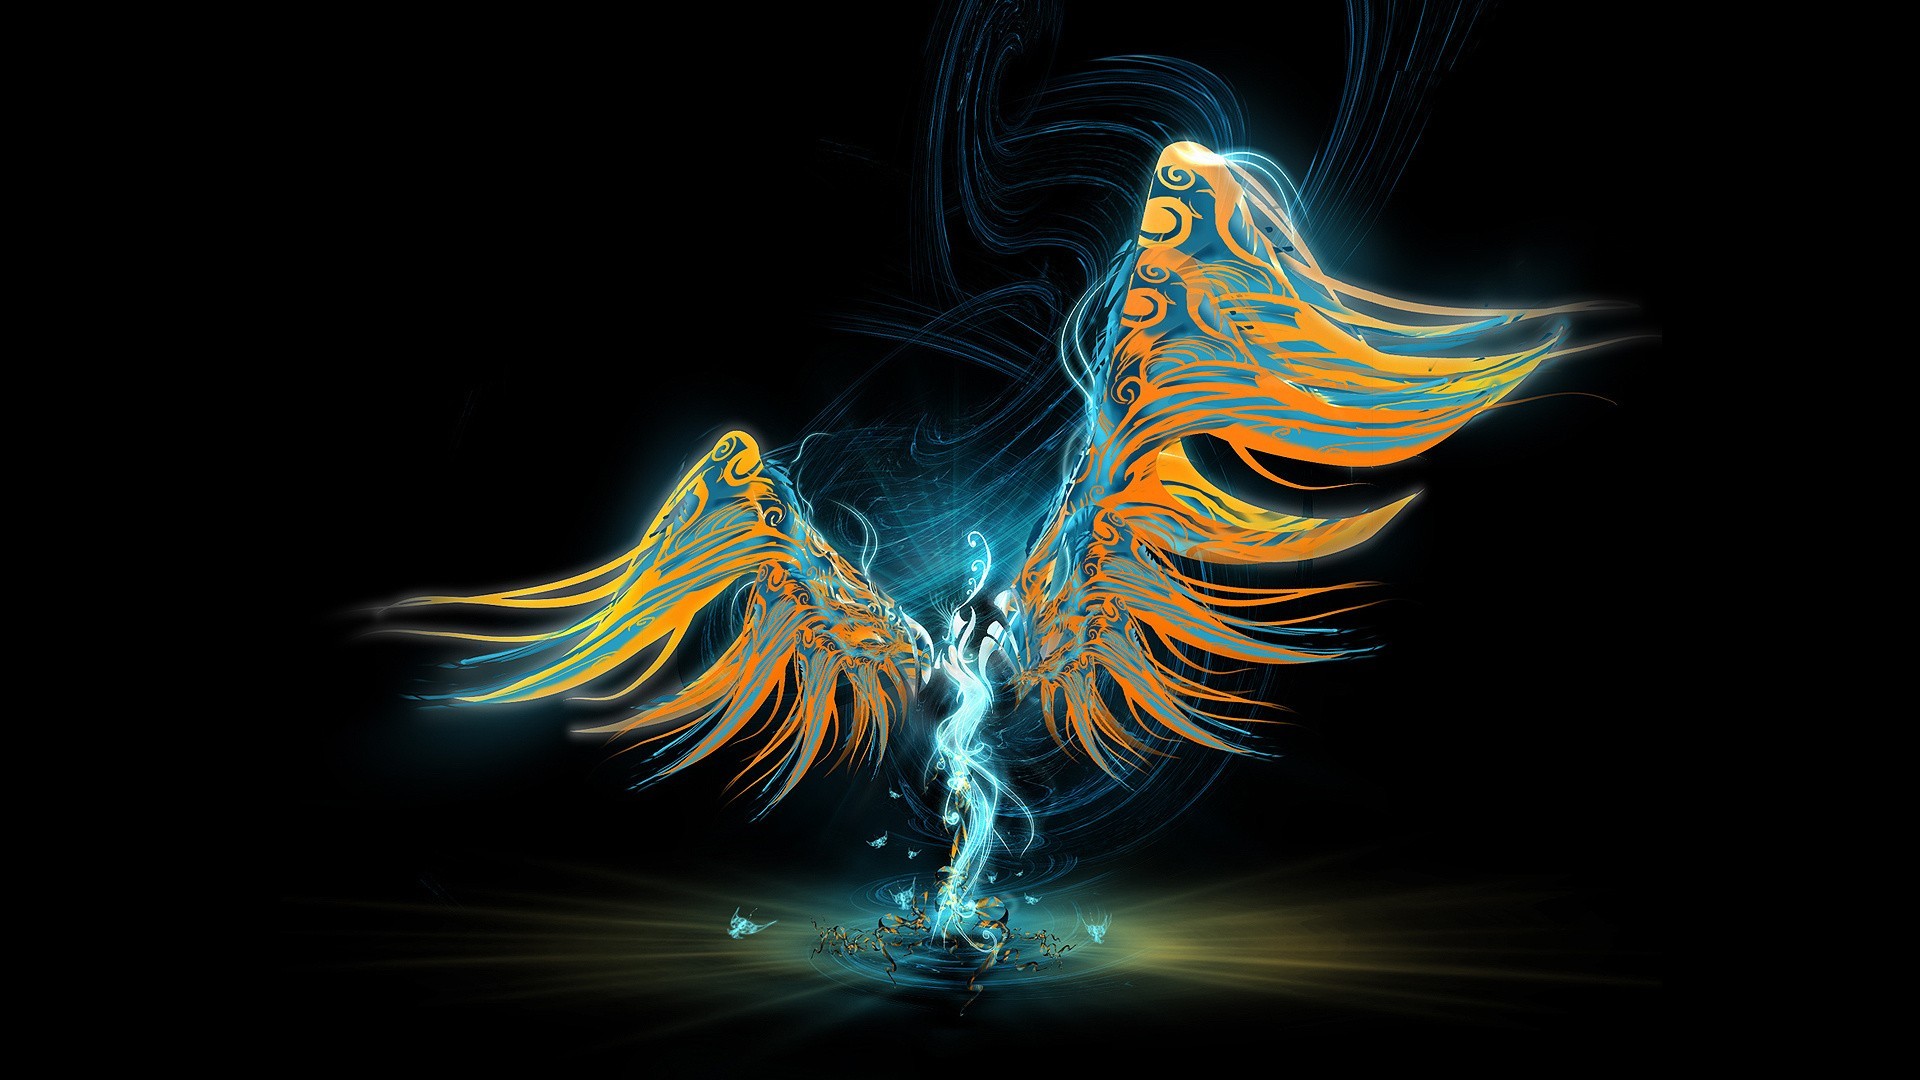 General 1920x1080 wings angel lights dark background fire women fantasy art abstract simple background digital art artwork